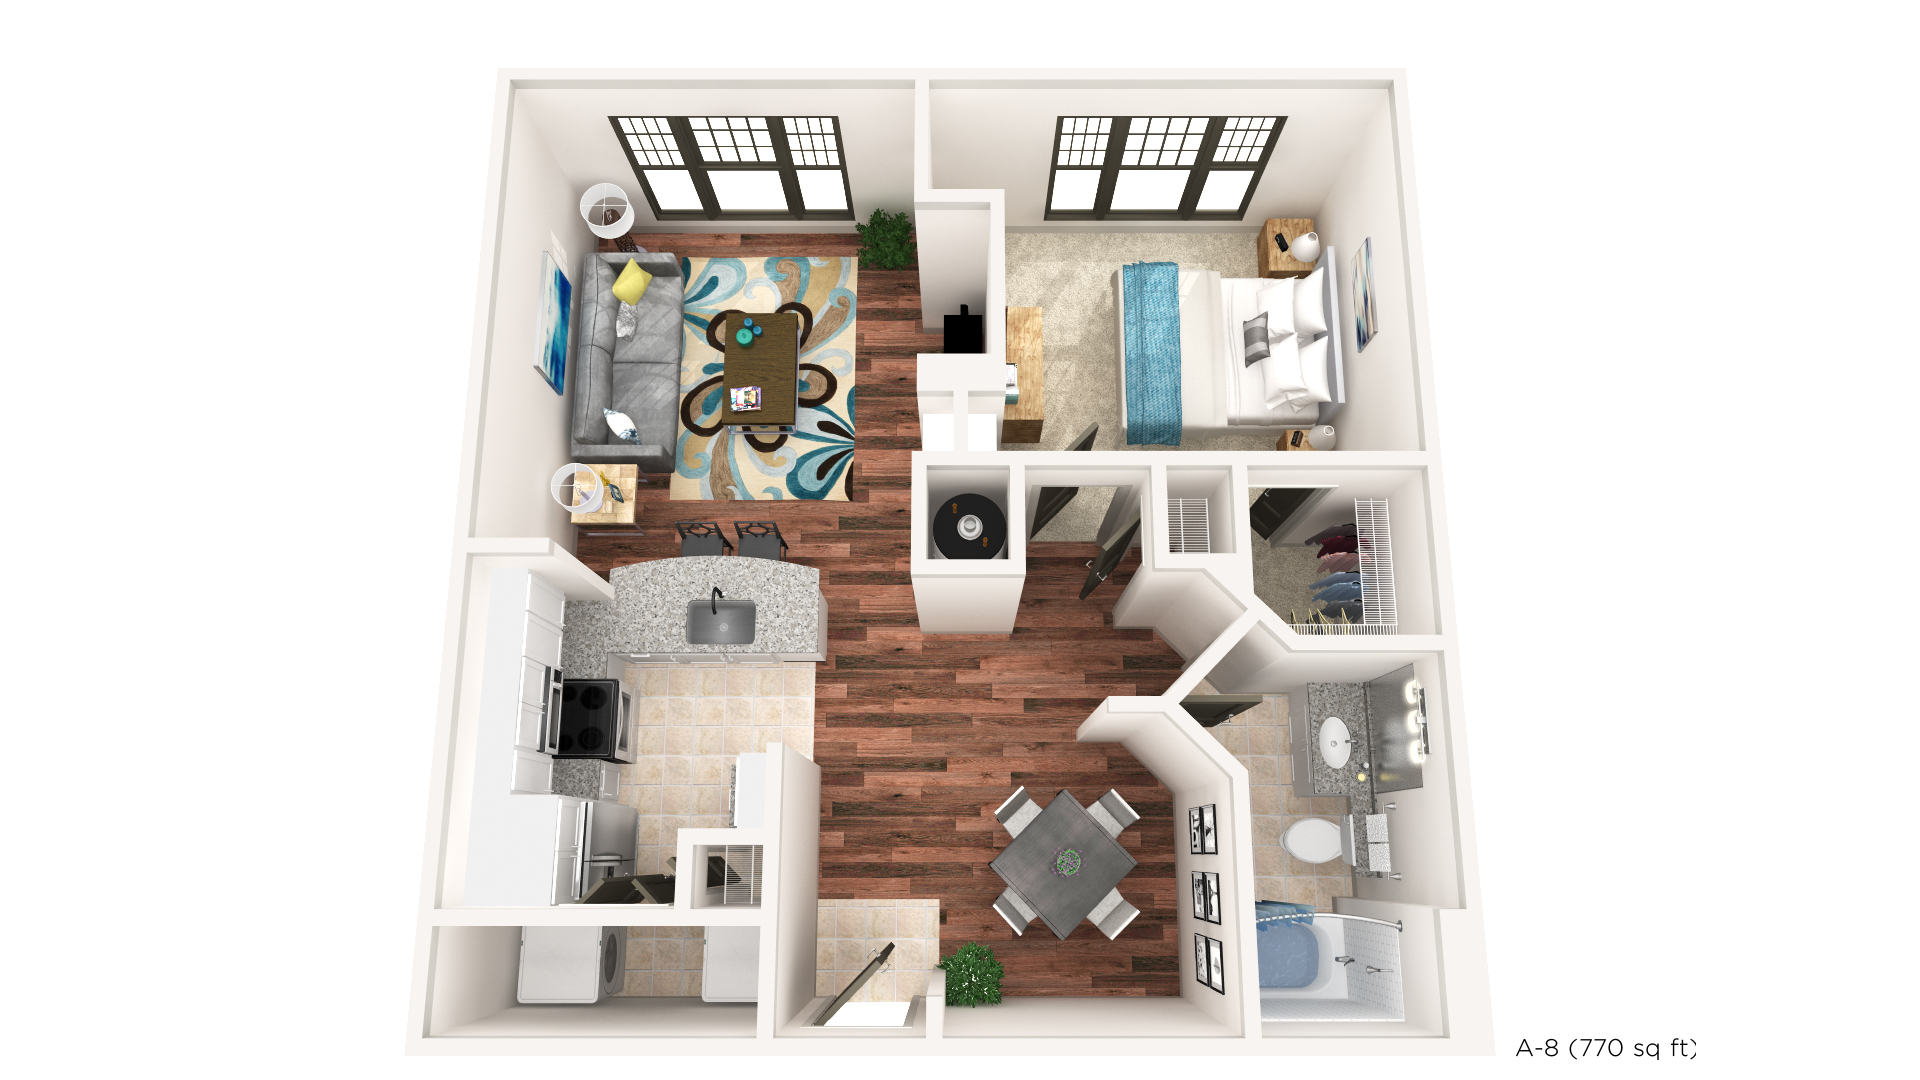 Brookleigh Flats Luxury Apartment Homes - Floorplan - A-8